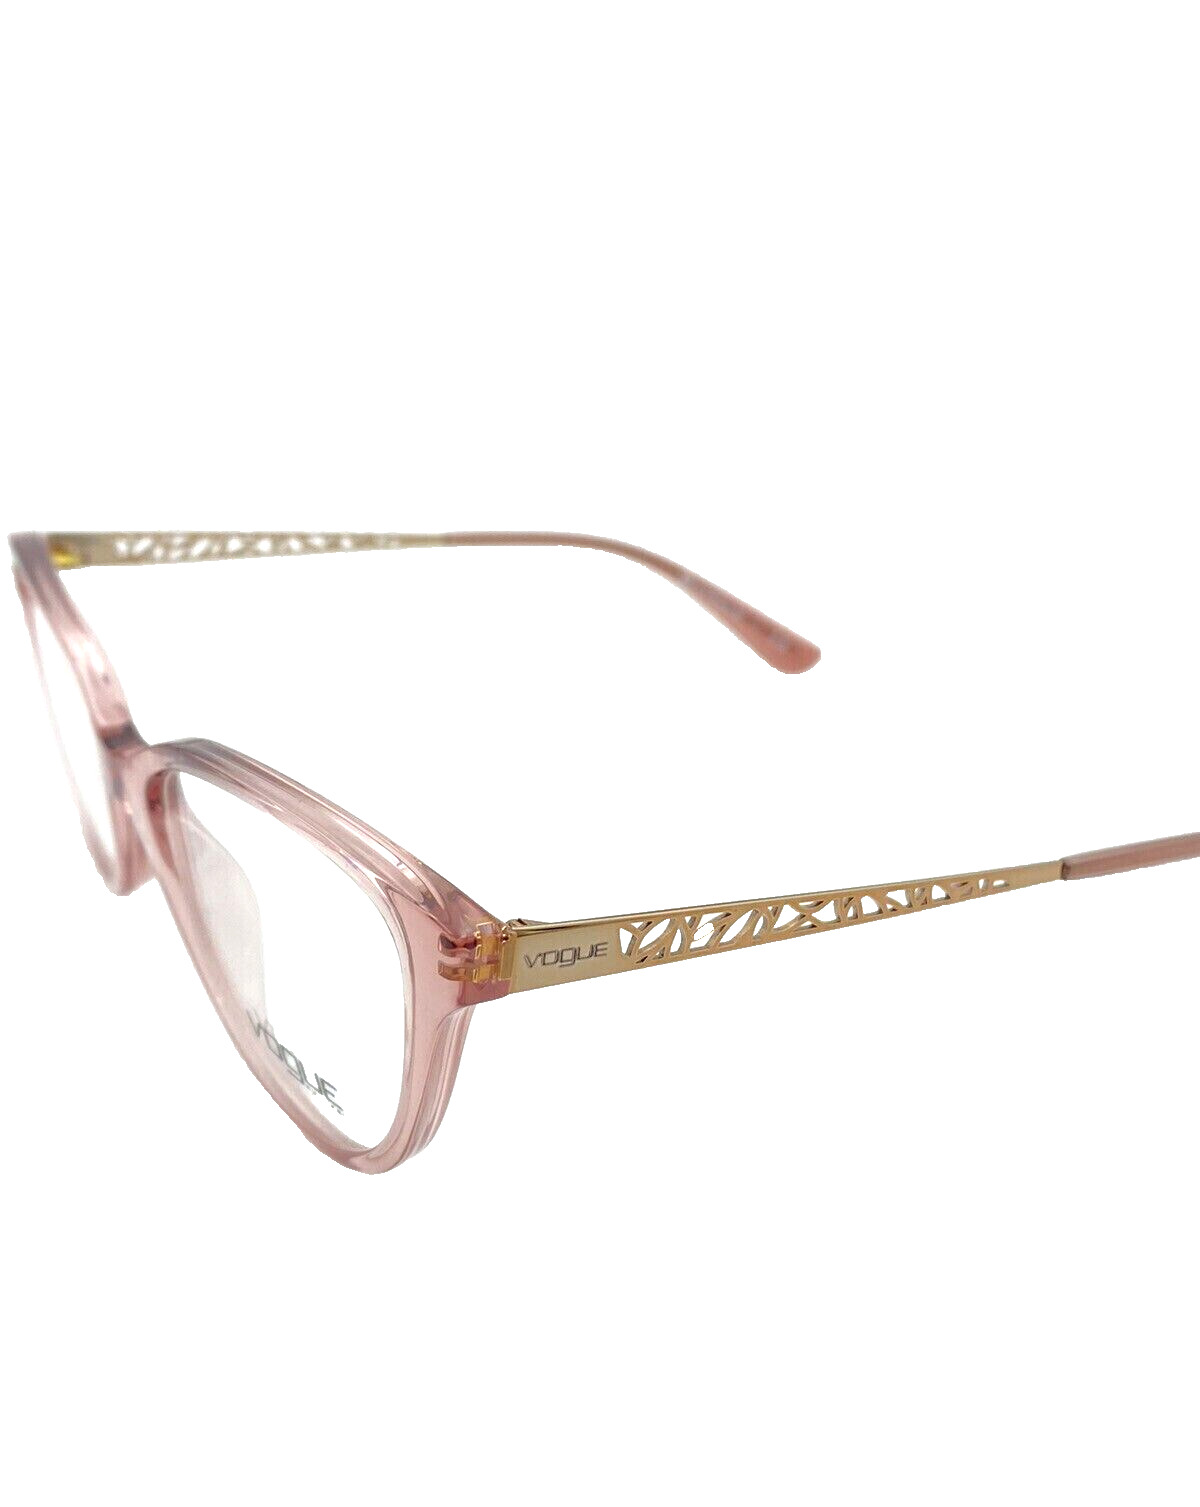 Vogue VO 5258 2599 51 16 Rosé Brille Brillengestell eyeglasses m. Etui